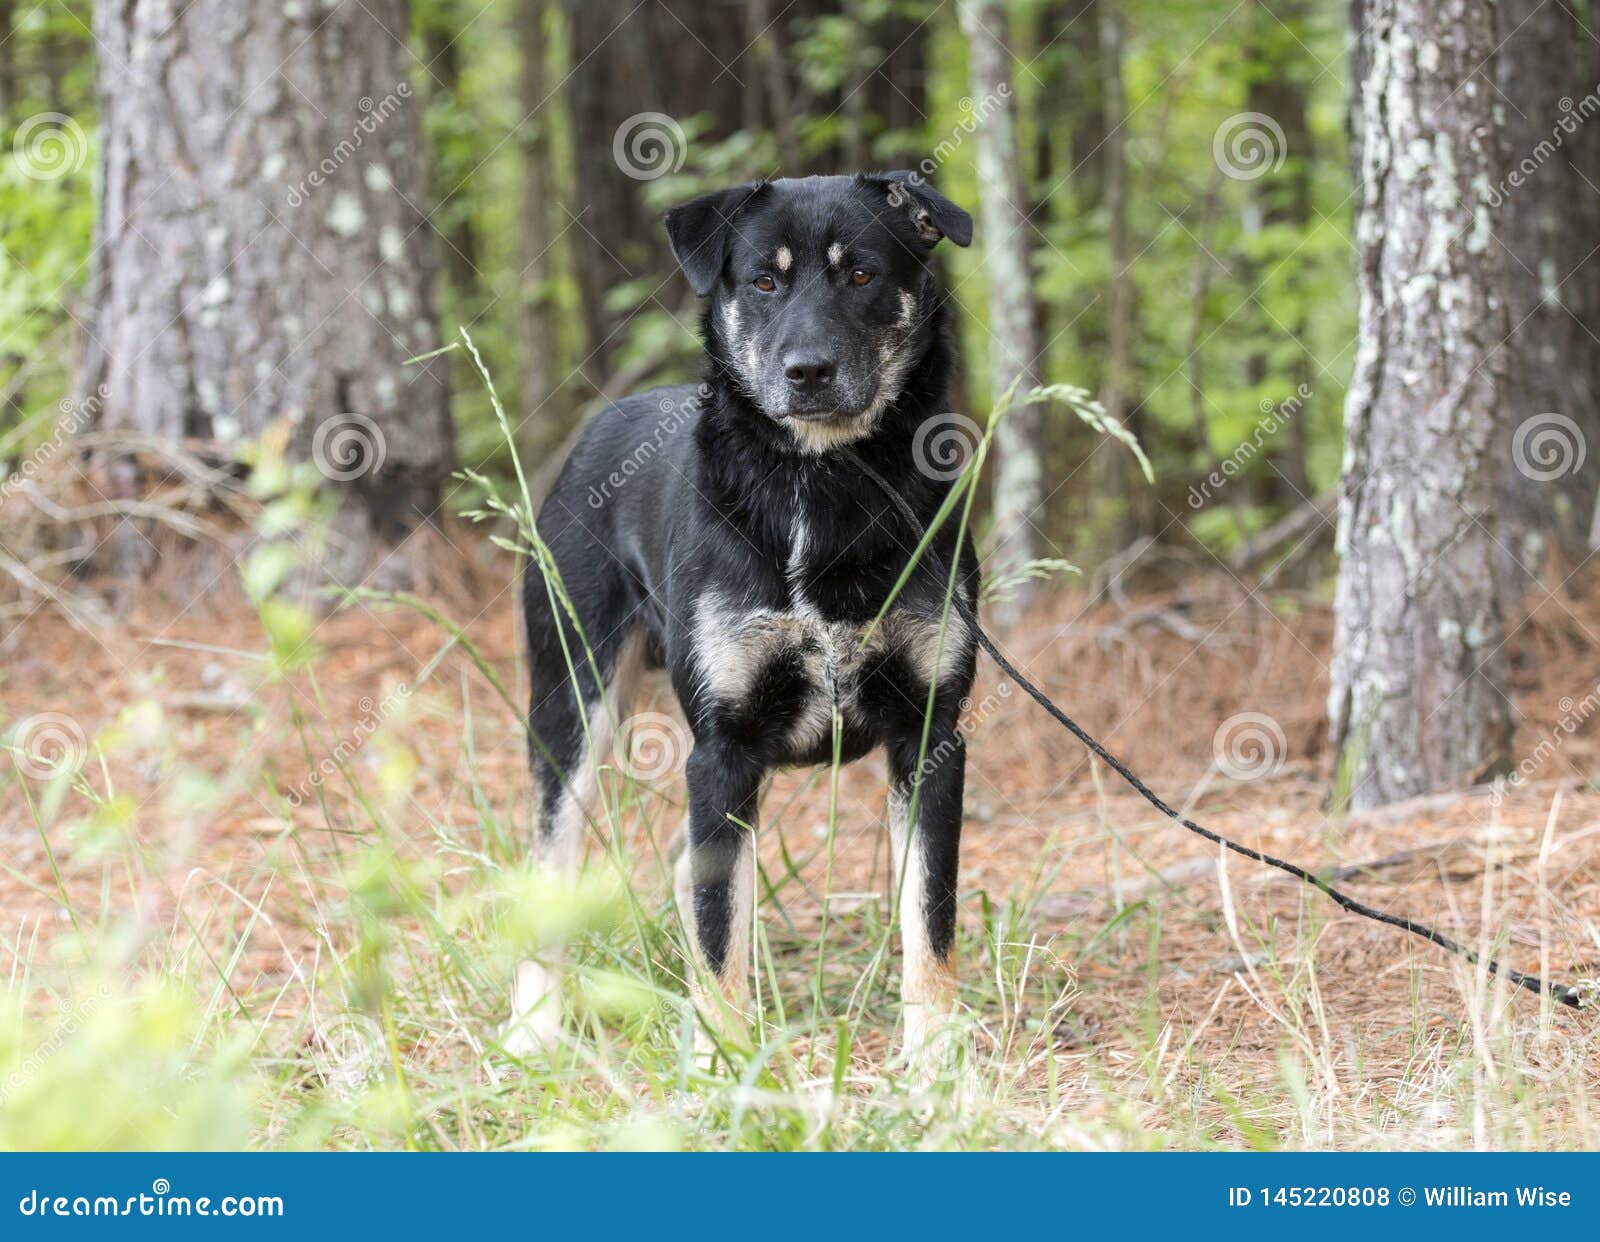 Australian Shepherd And Retriever Mix Breed Dog Stock Photo Image Of Georgia Adoption 145220808